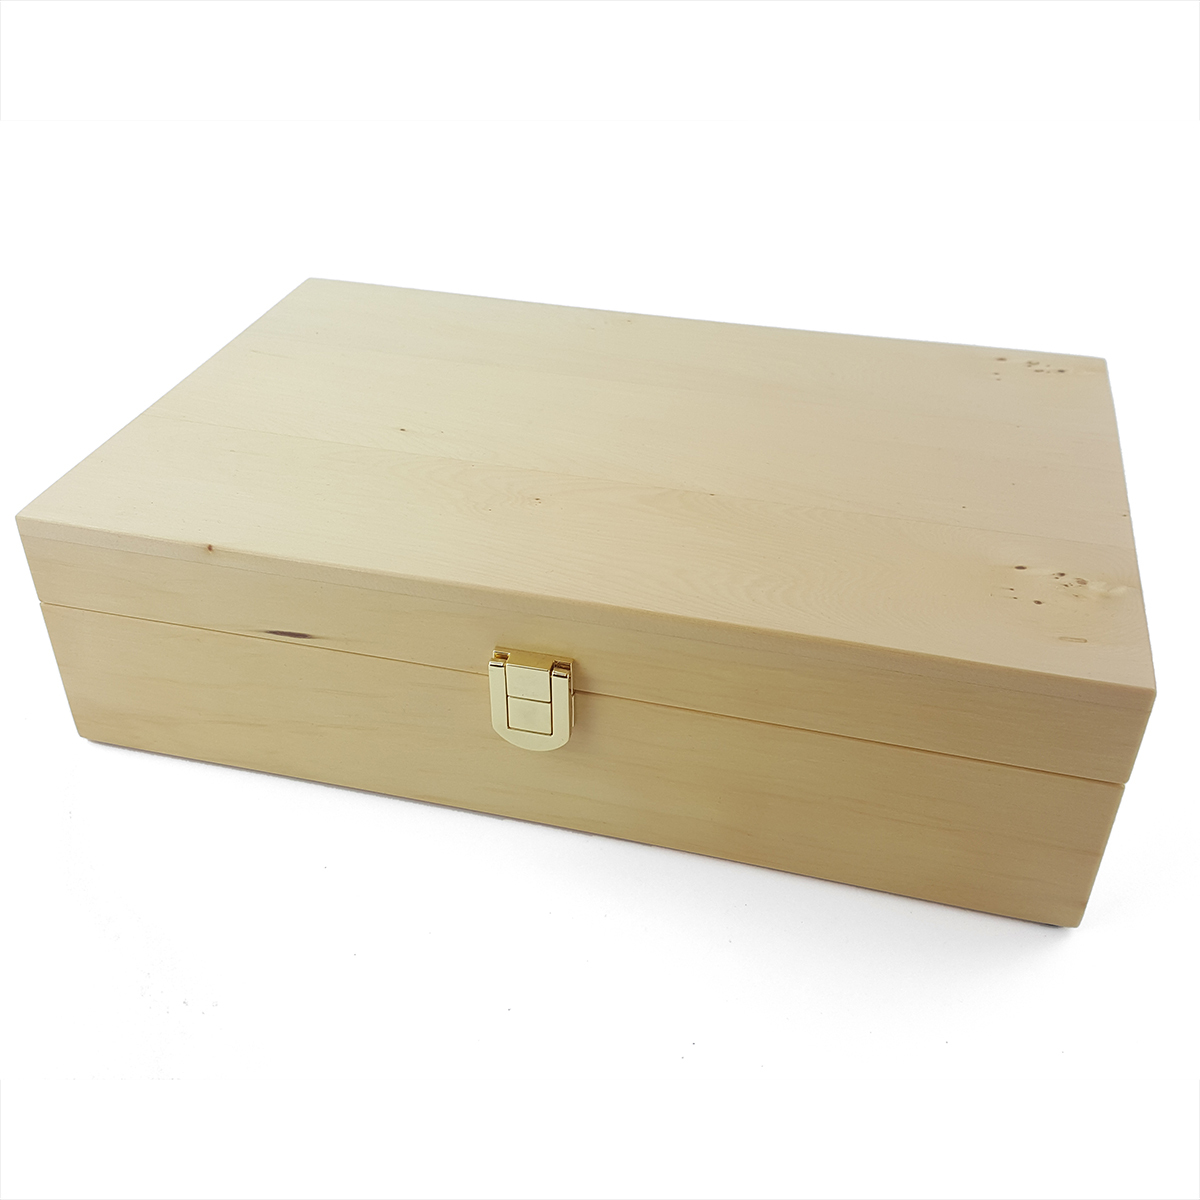 Tasmanian Huon Pine Corporate Gift Box Large View